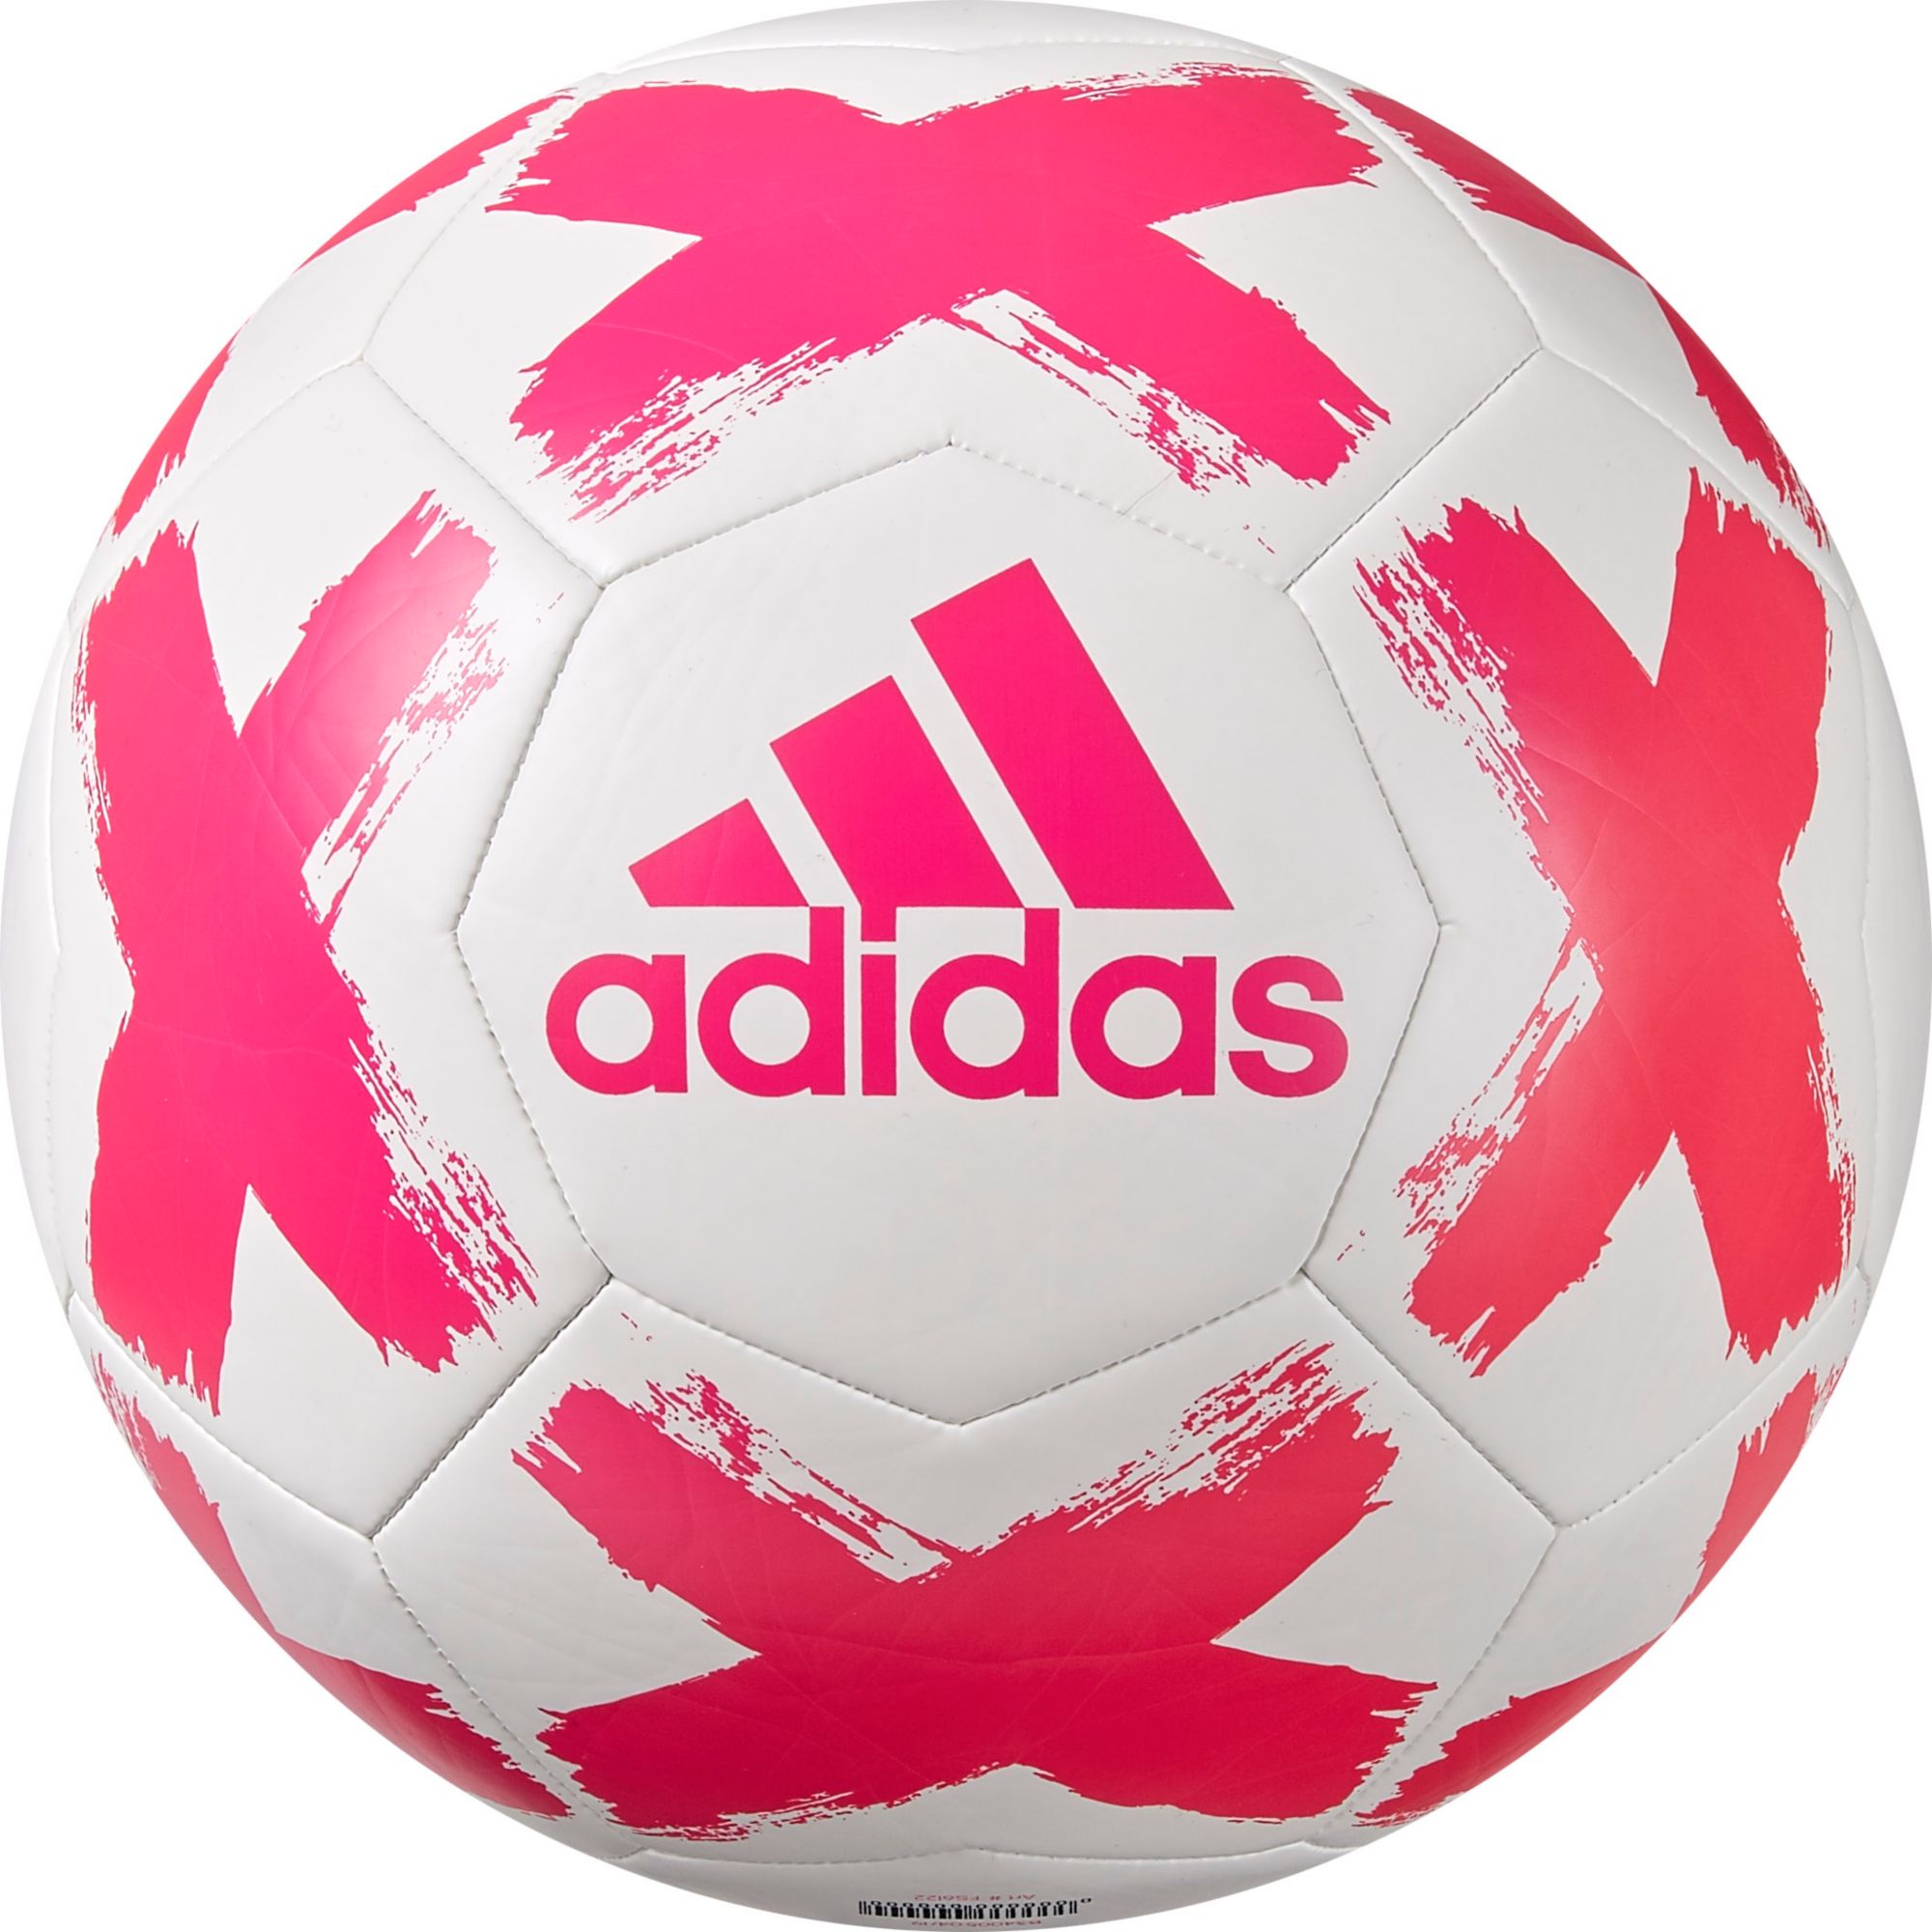 Dicks sporting goods addidas soccer balls